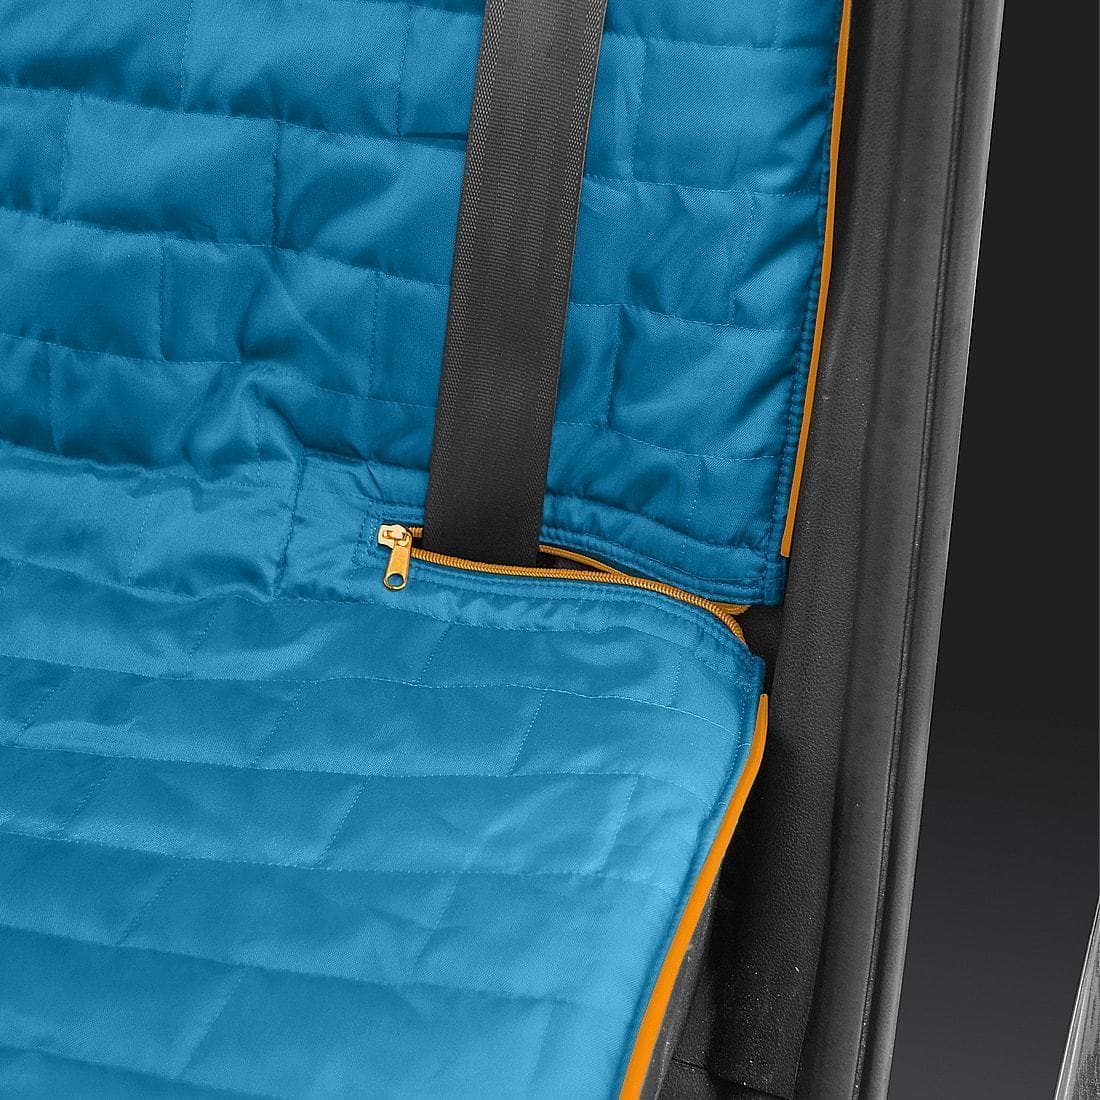 Loft Hammock Seat Cover - Hamaca Cubre Asientos Loft Azul/Gris de Kurgo®